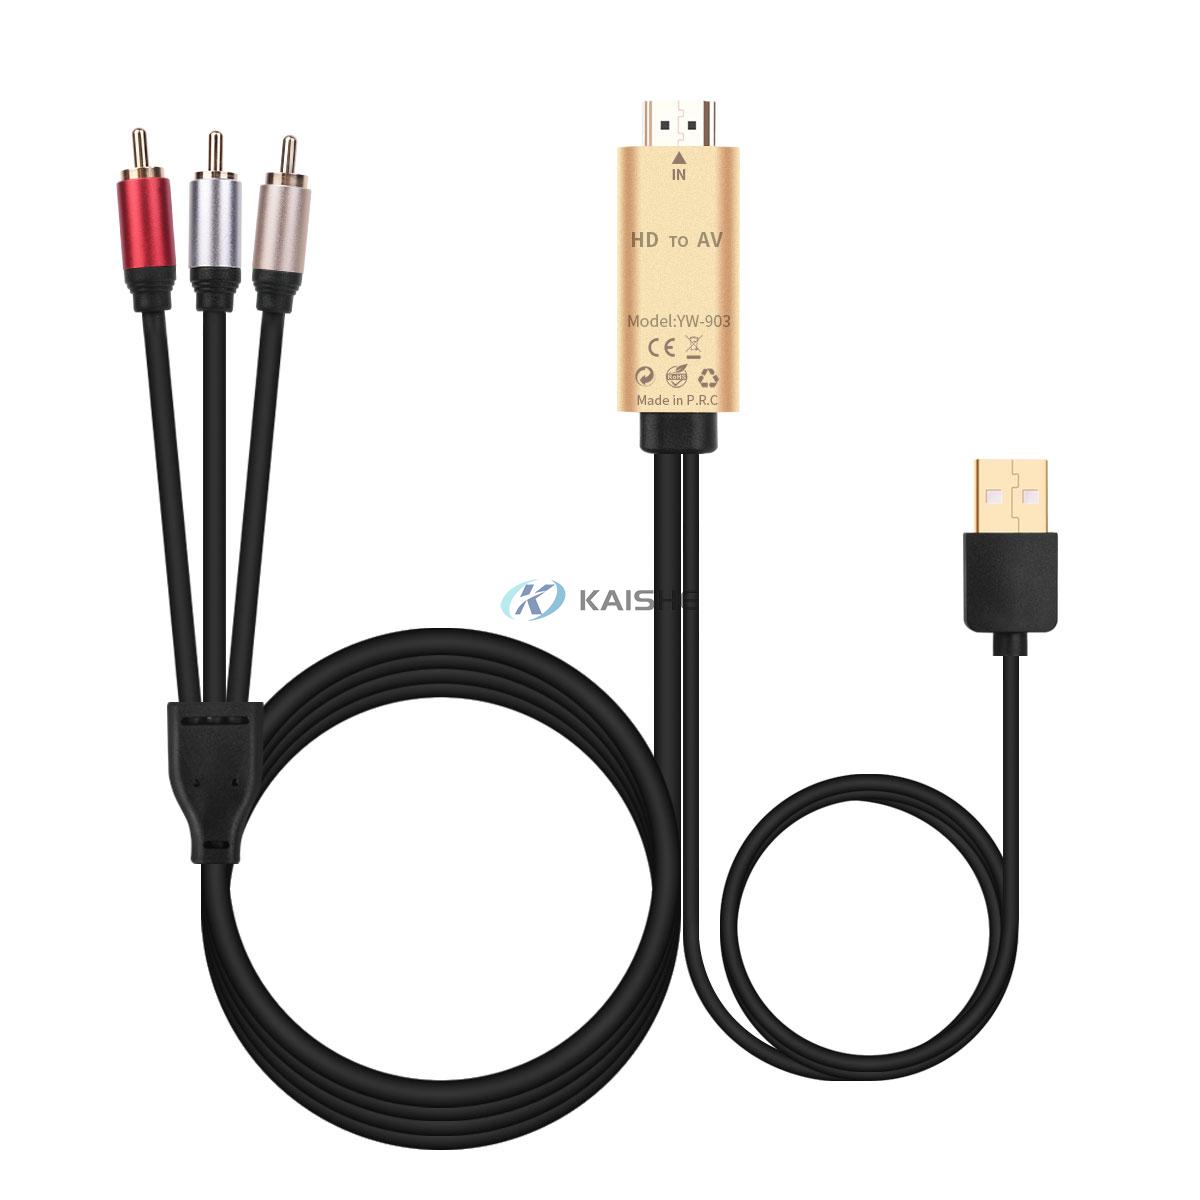 HDMI to AV CVBS Converter Adapter Cable, PAL/NTSC with USB Charging